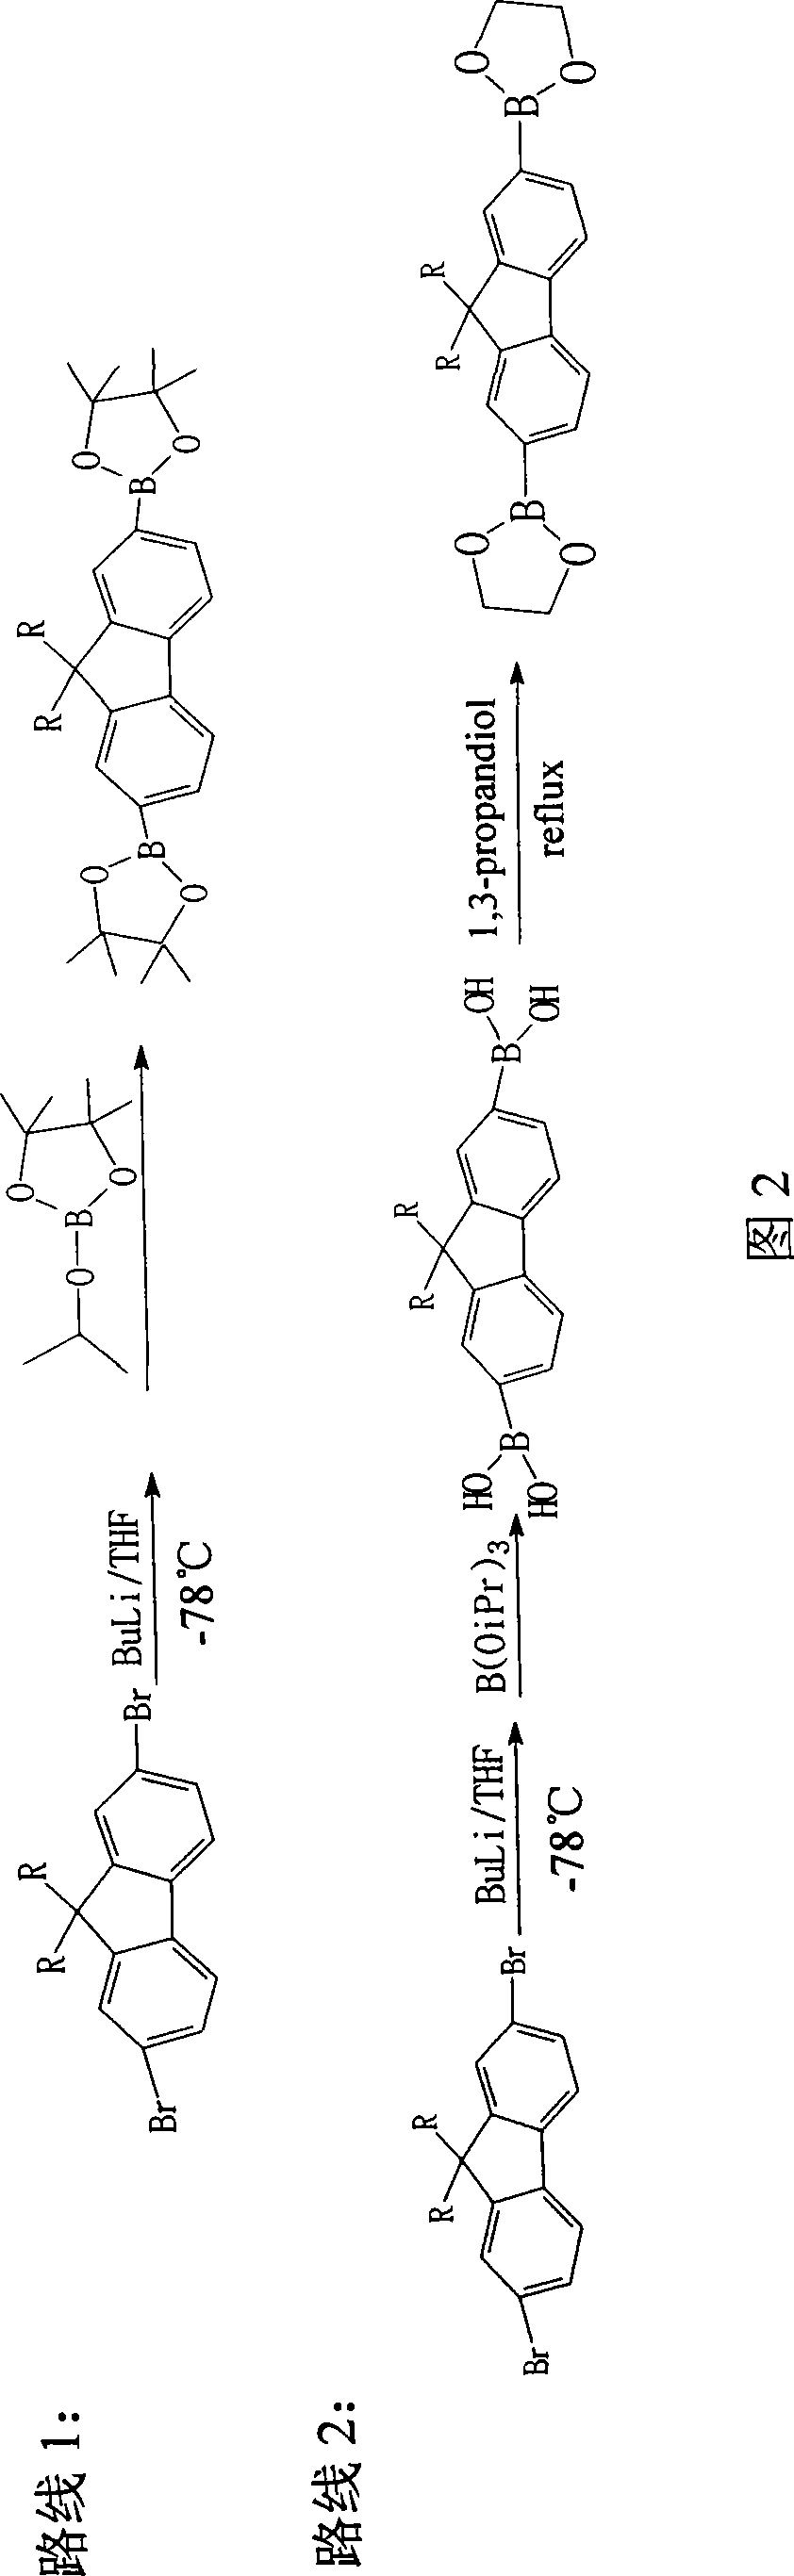 Synthesis of esterifiable fluorene diborate